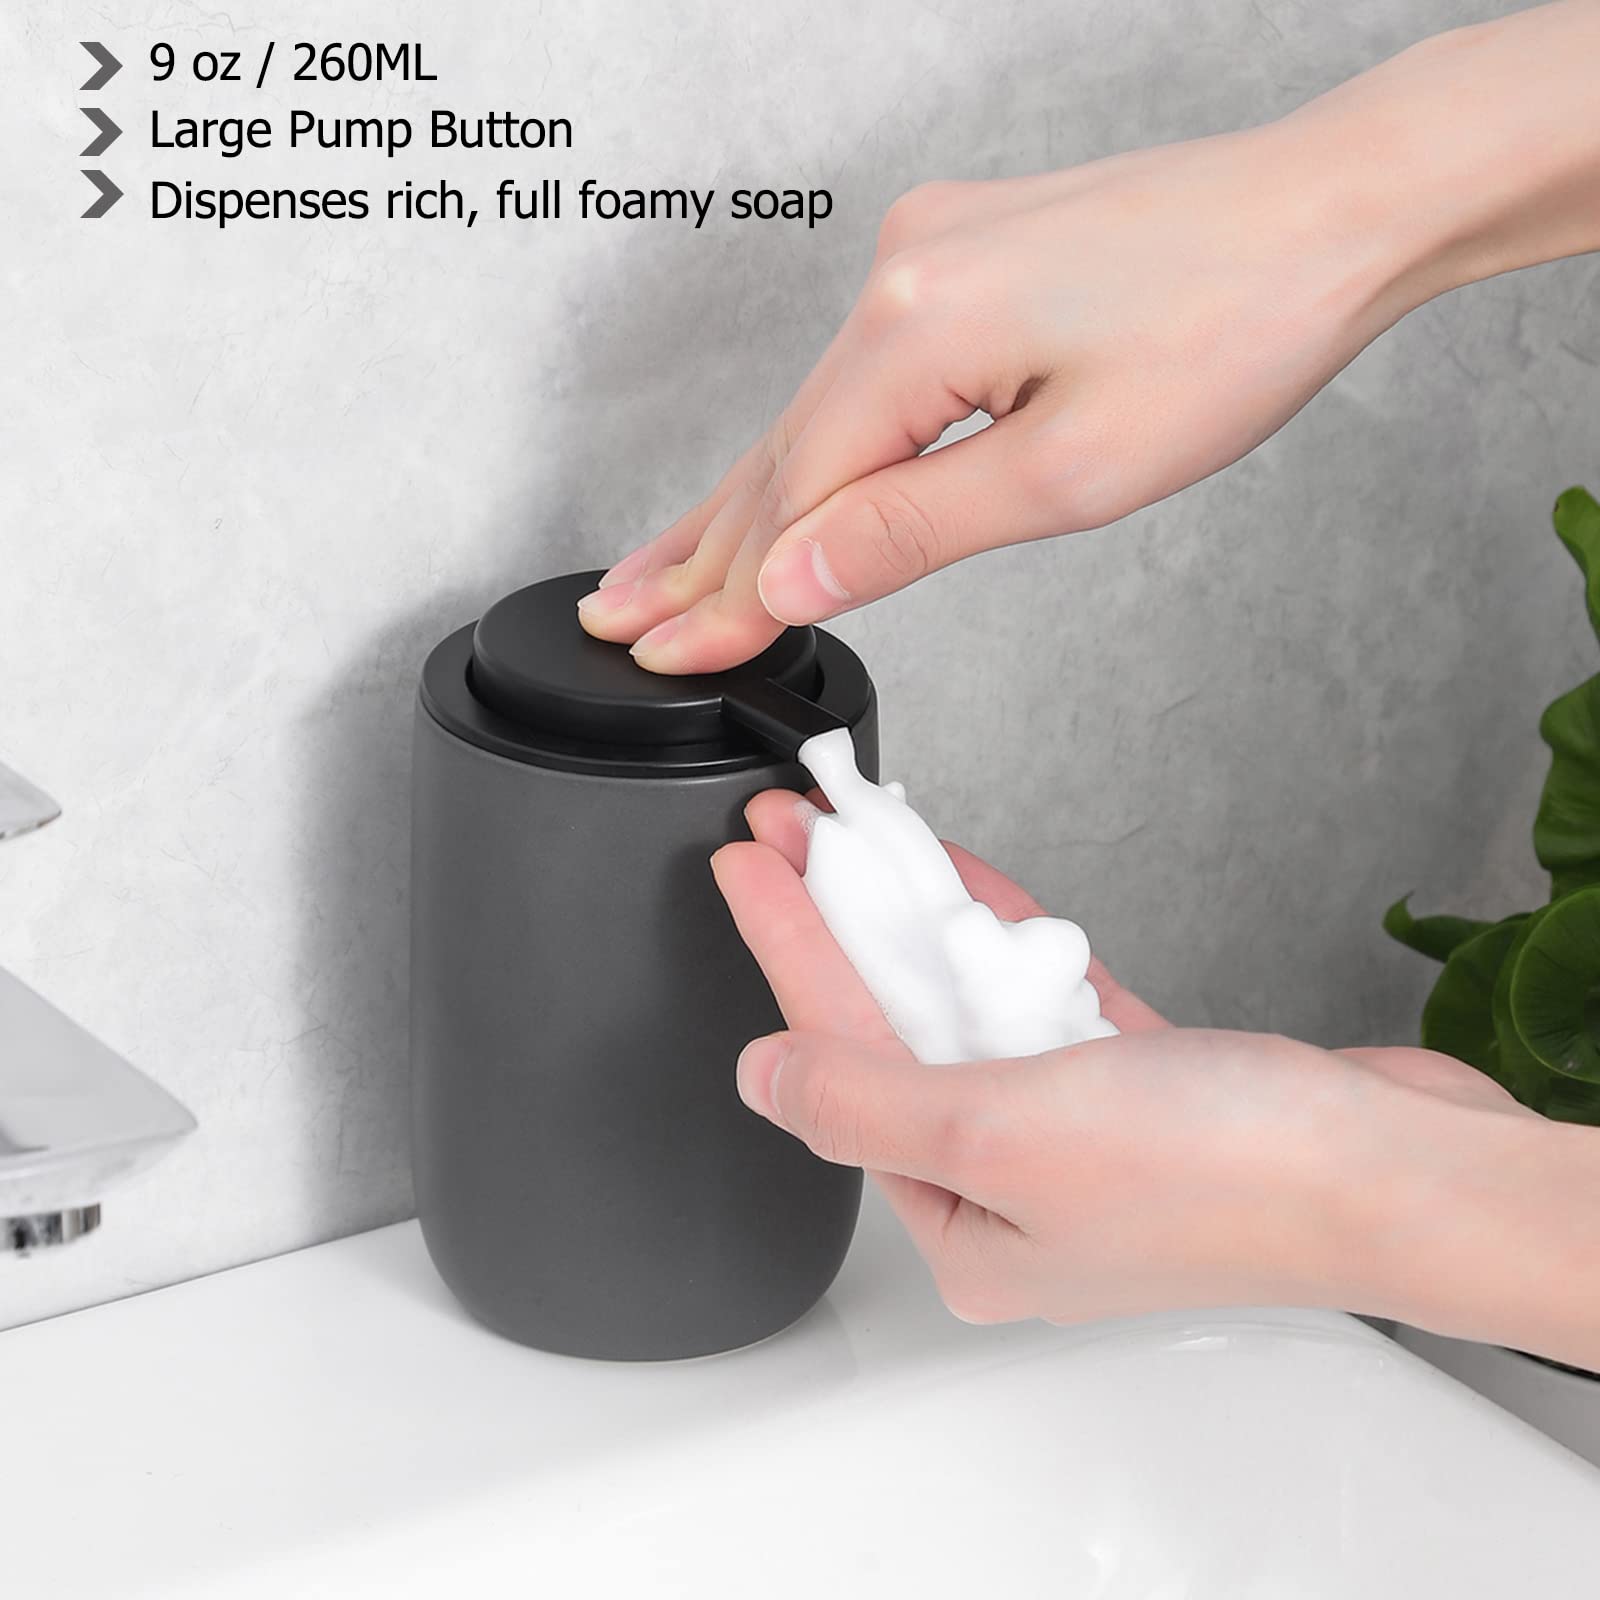 Foaming Soap Dispenser Thick Ceramic Foam Hand Soap Dispenser for Bathroom or Kitchen Sink, Liquid Pump Bottles for Hand soap, Body Wash, 2 Pack Grey